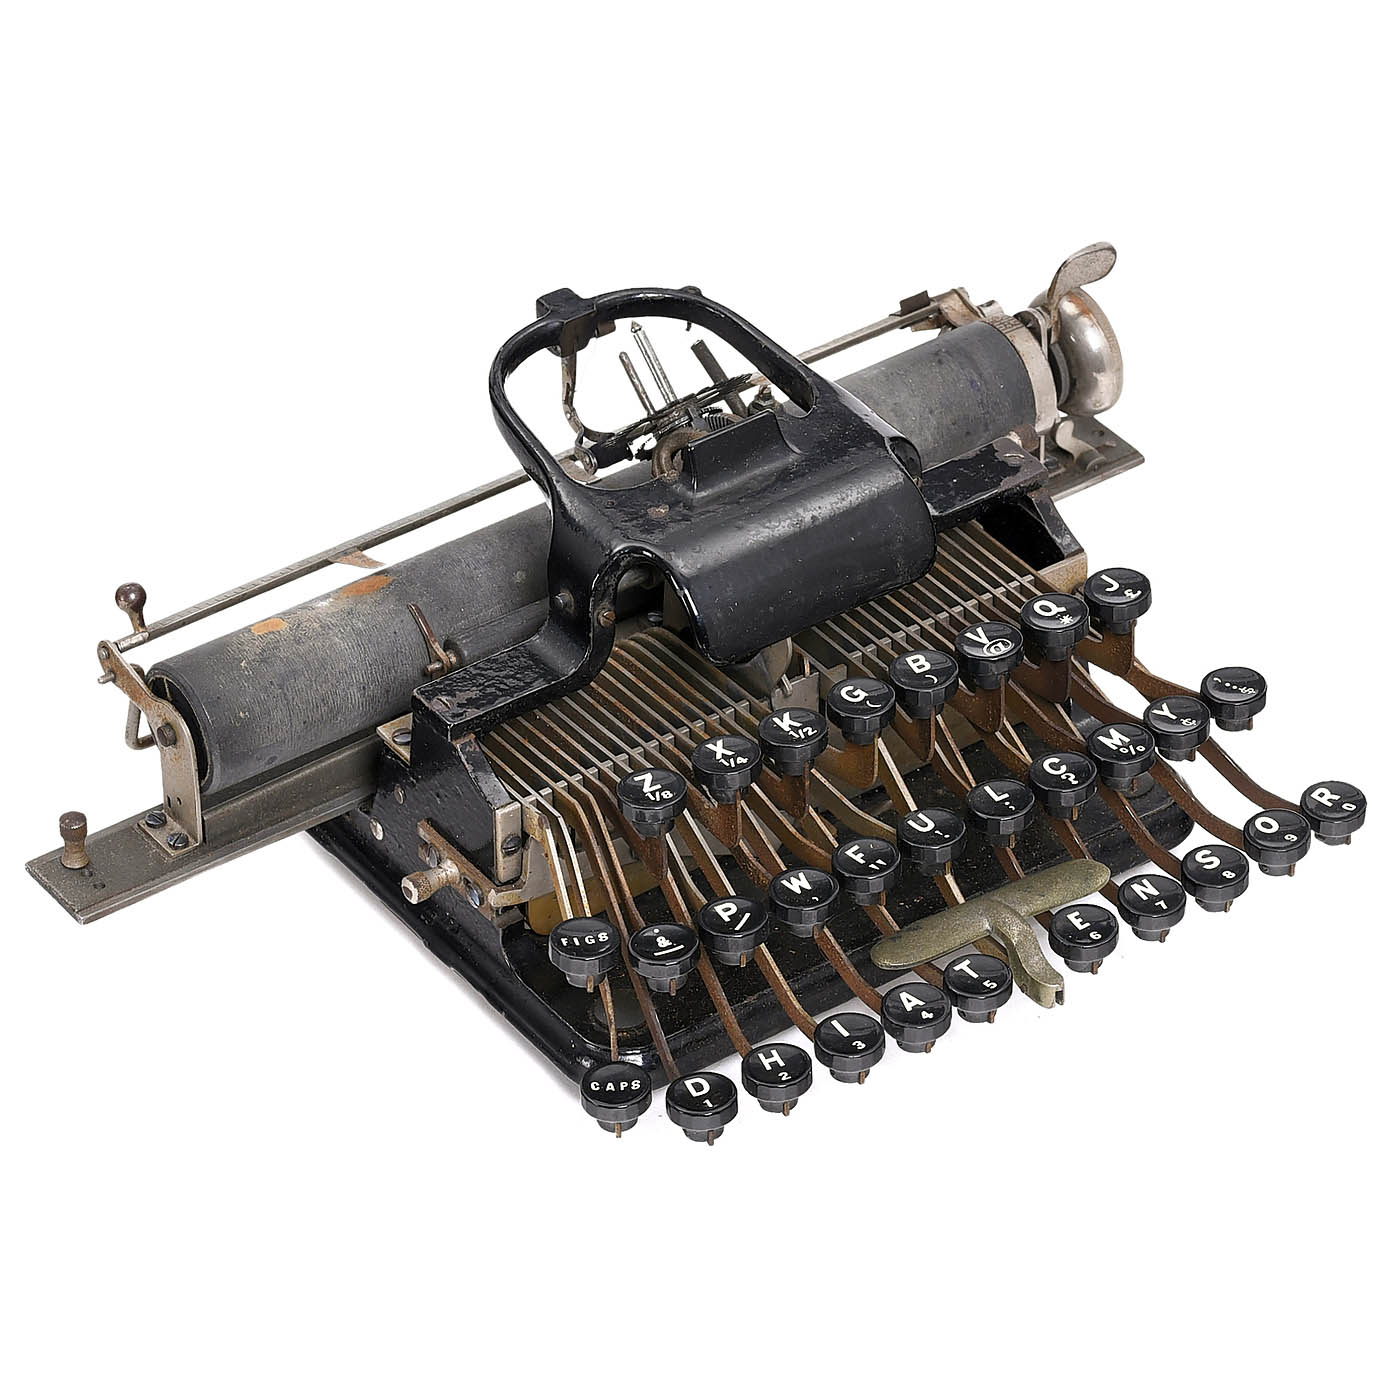 3 Blickensderfer Typewriters - Image 3 of 4